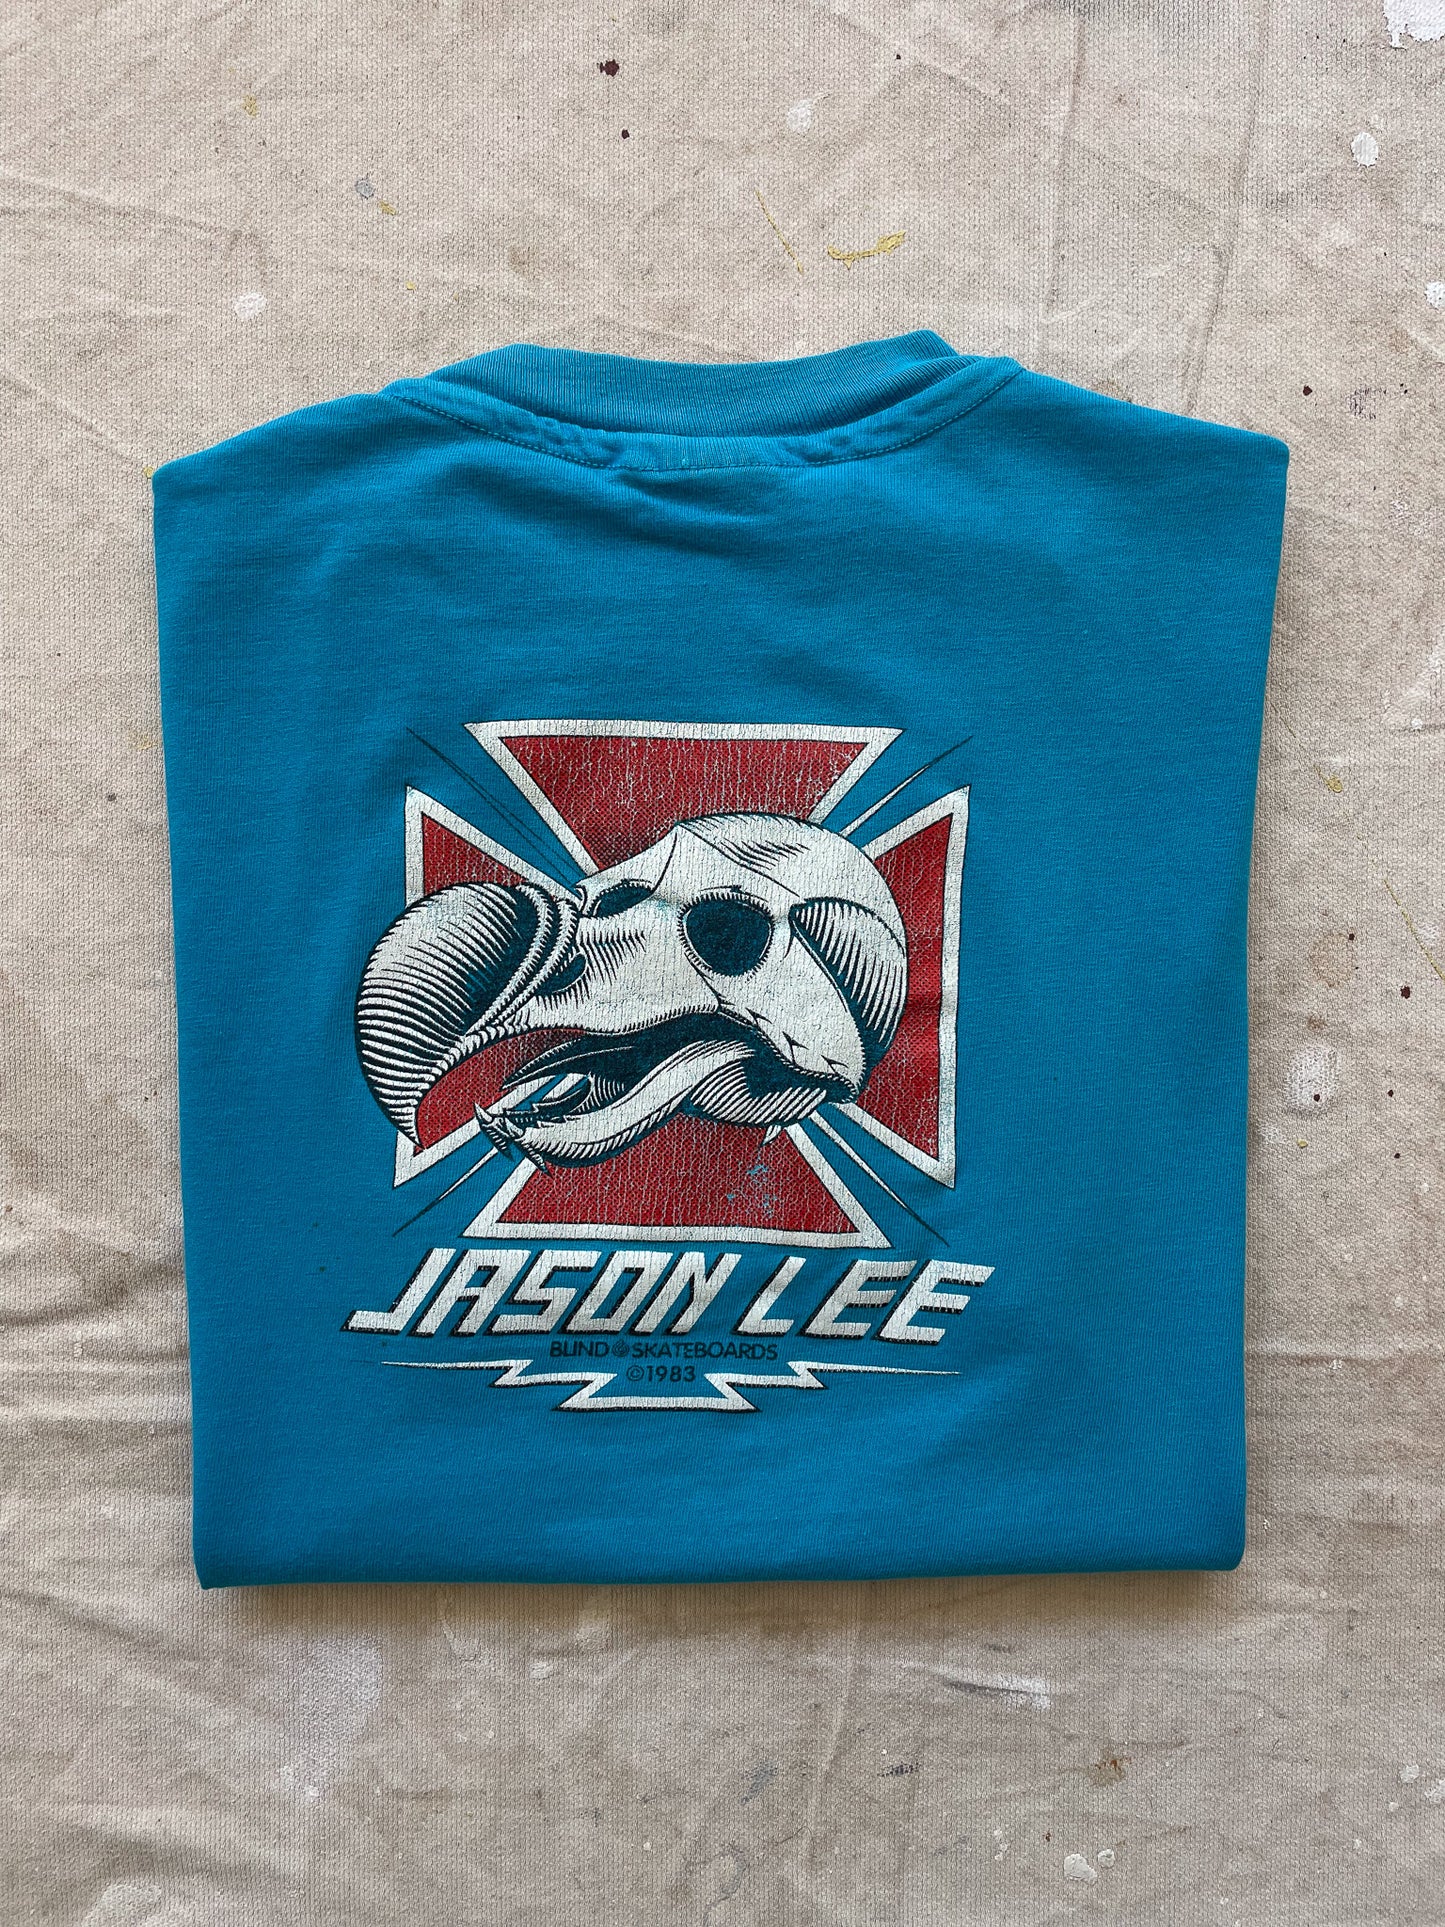 Jason Lee Blind Skateboards T-Shirt—[S/M]